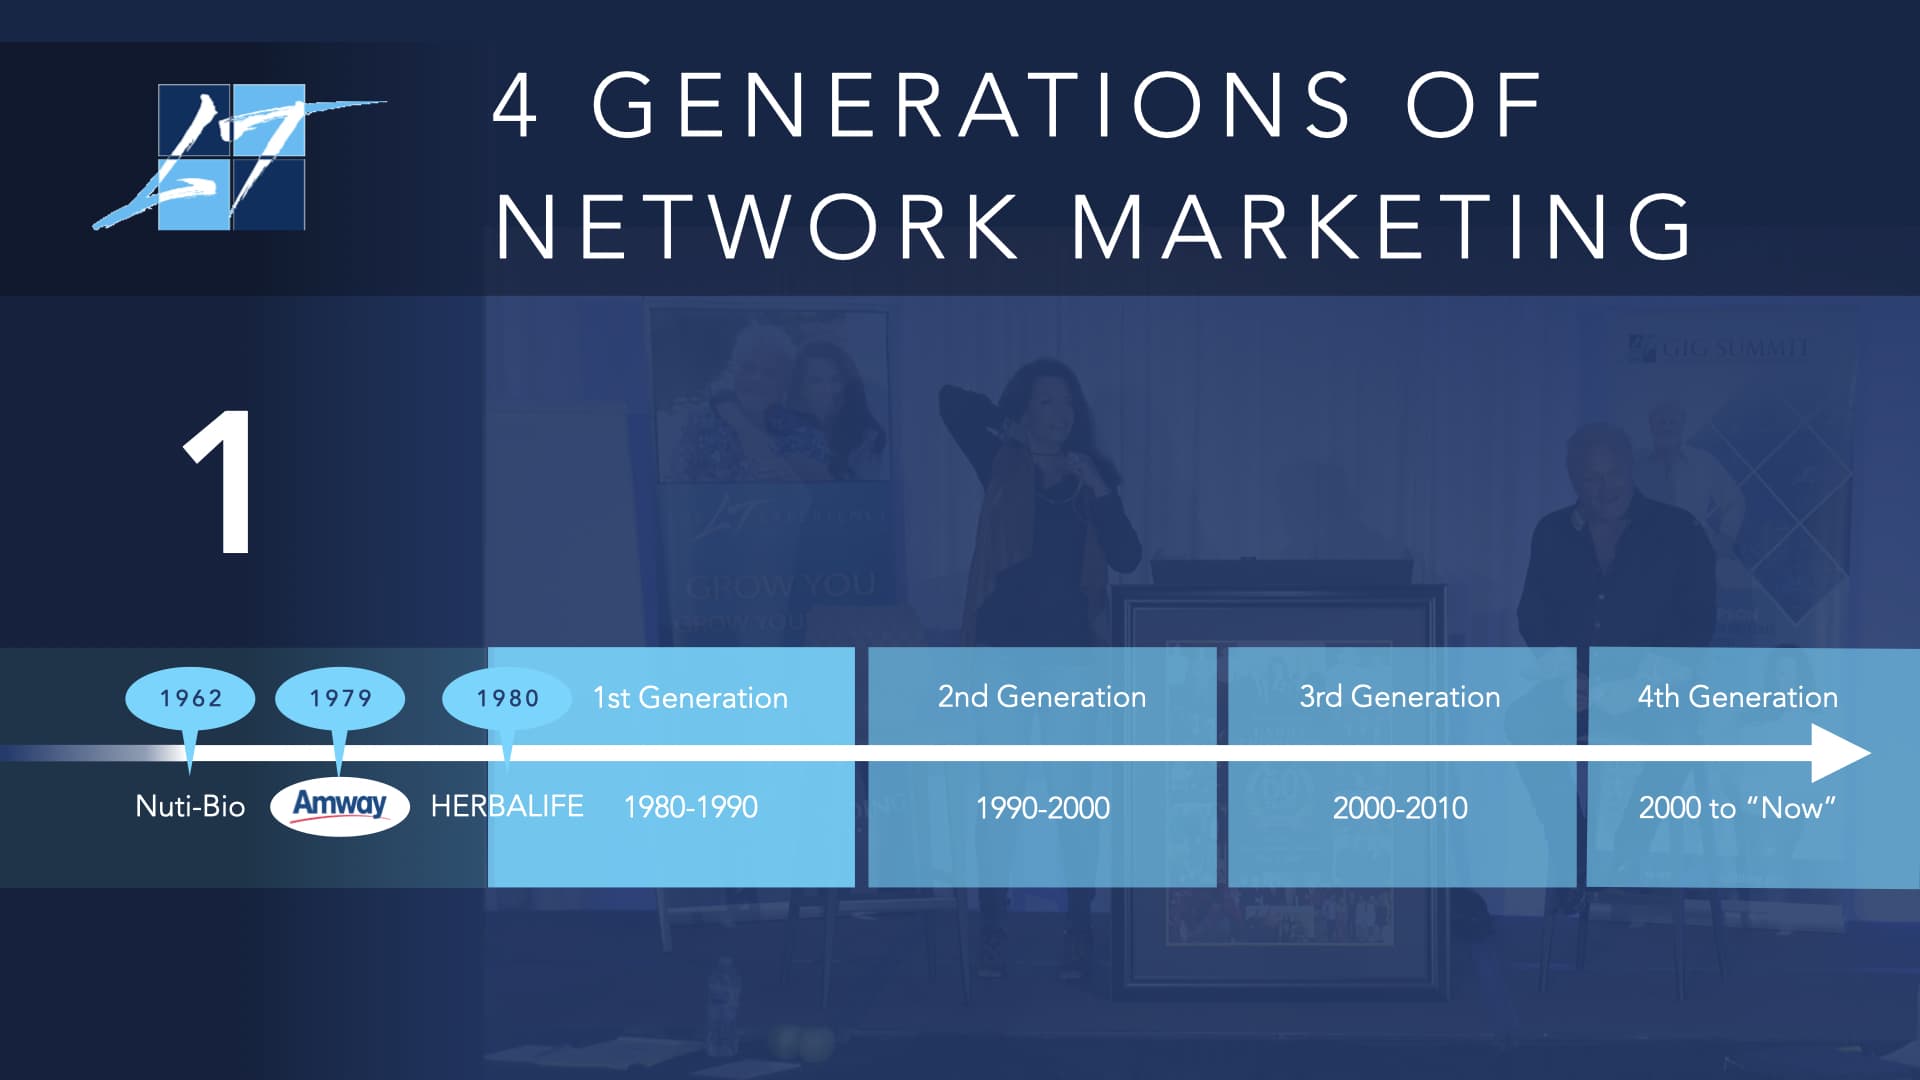 1st Generation of Network Marketing